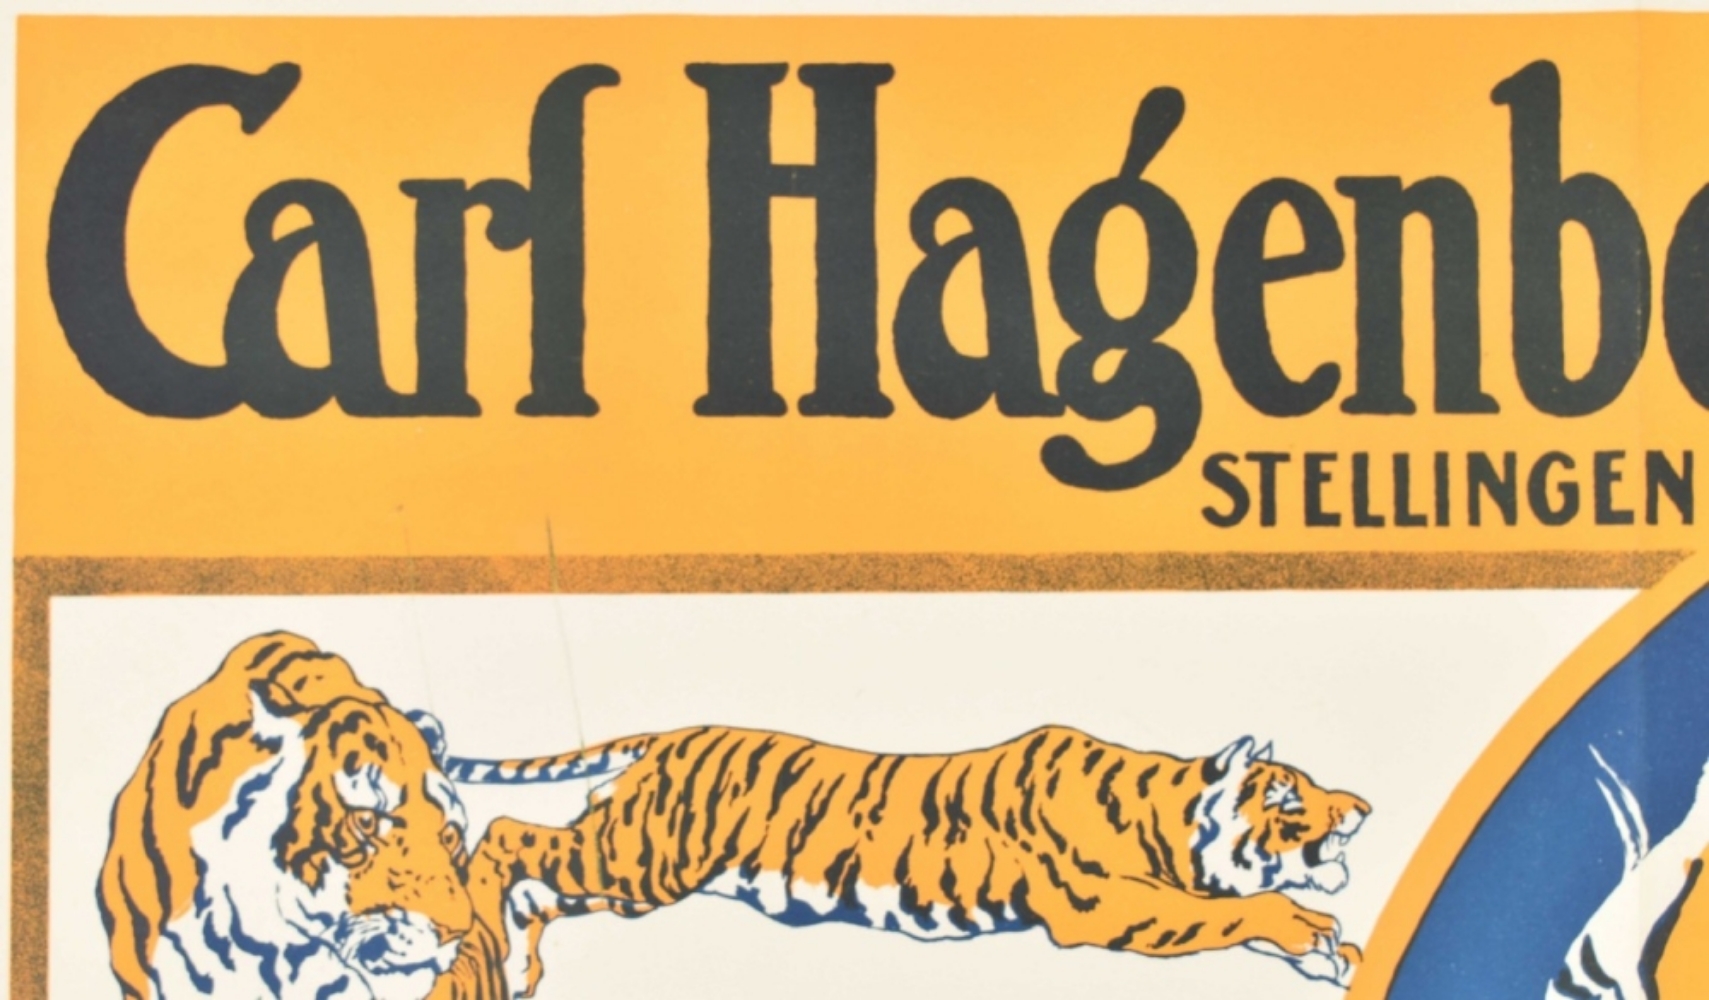 [Tigers] Carl Hagenbeck Hamburg - Image 6 of 7